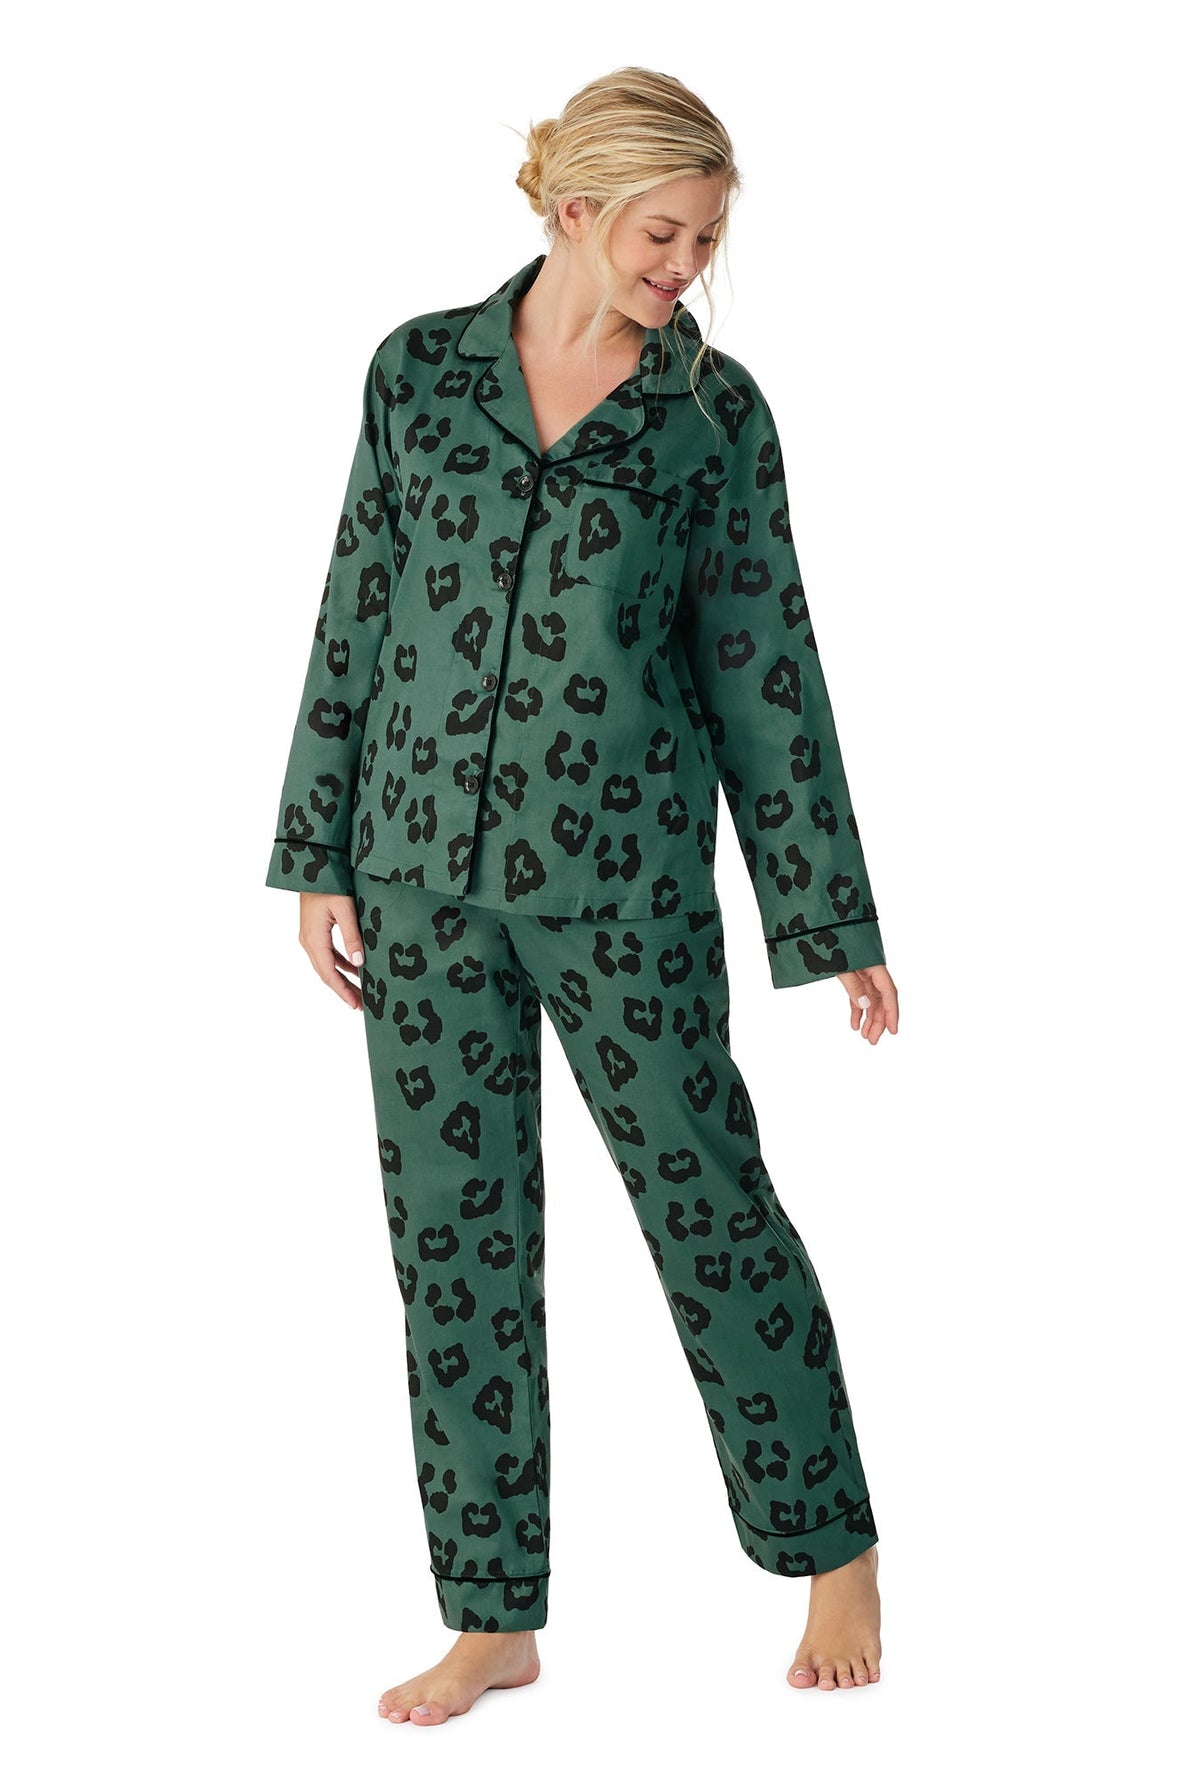 Feline Fine Long Sleeve Classic Woven Cotton PJ Set - Bedhead Pajamas